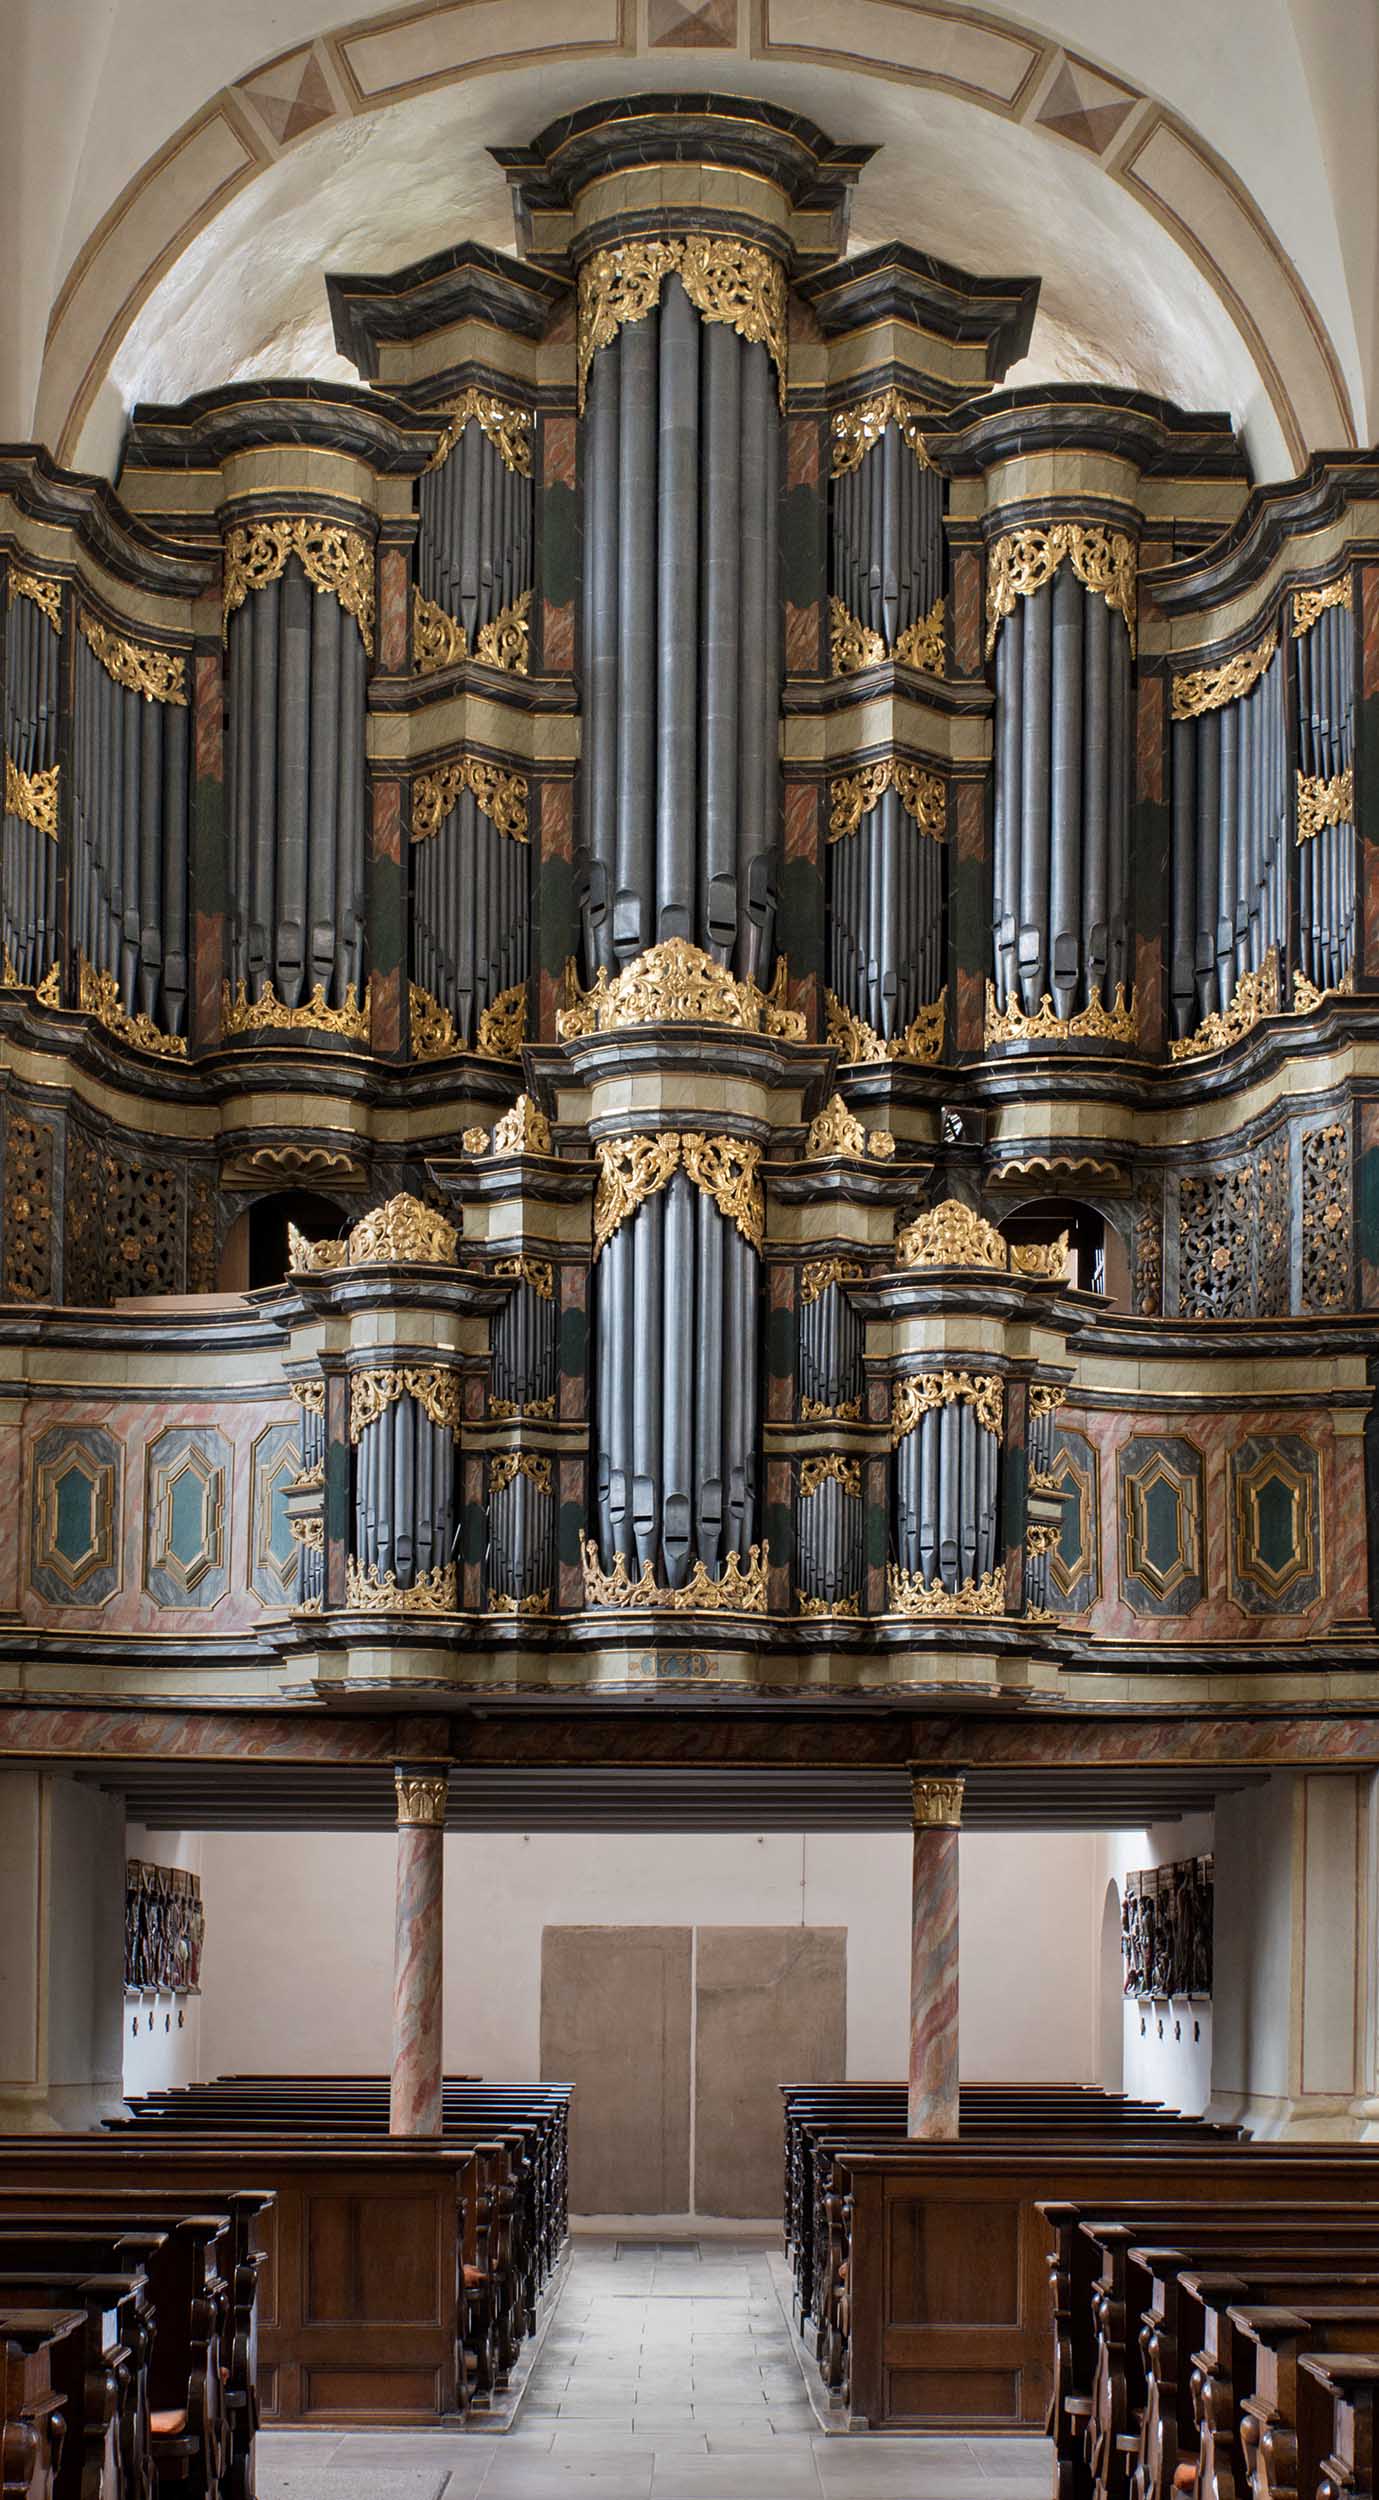 Restoration of the historical organ